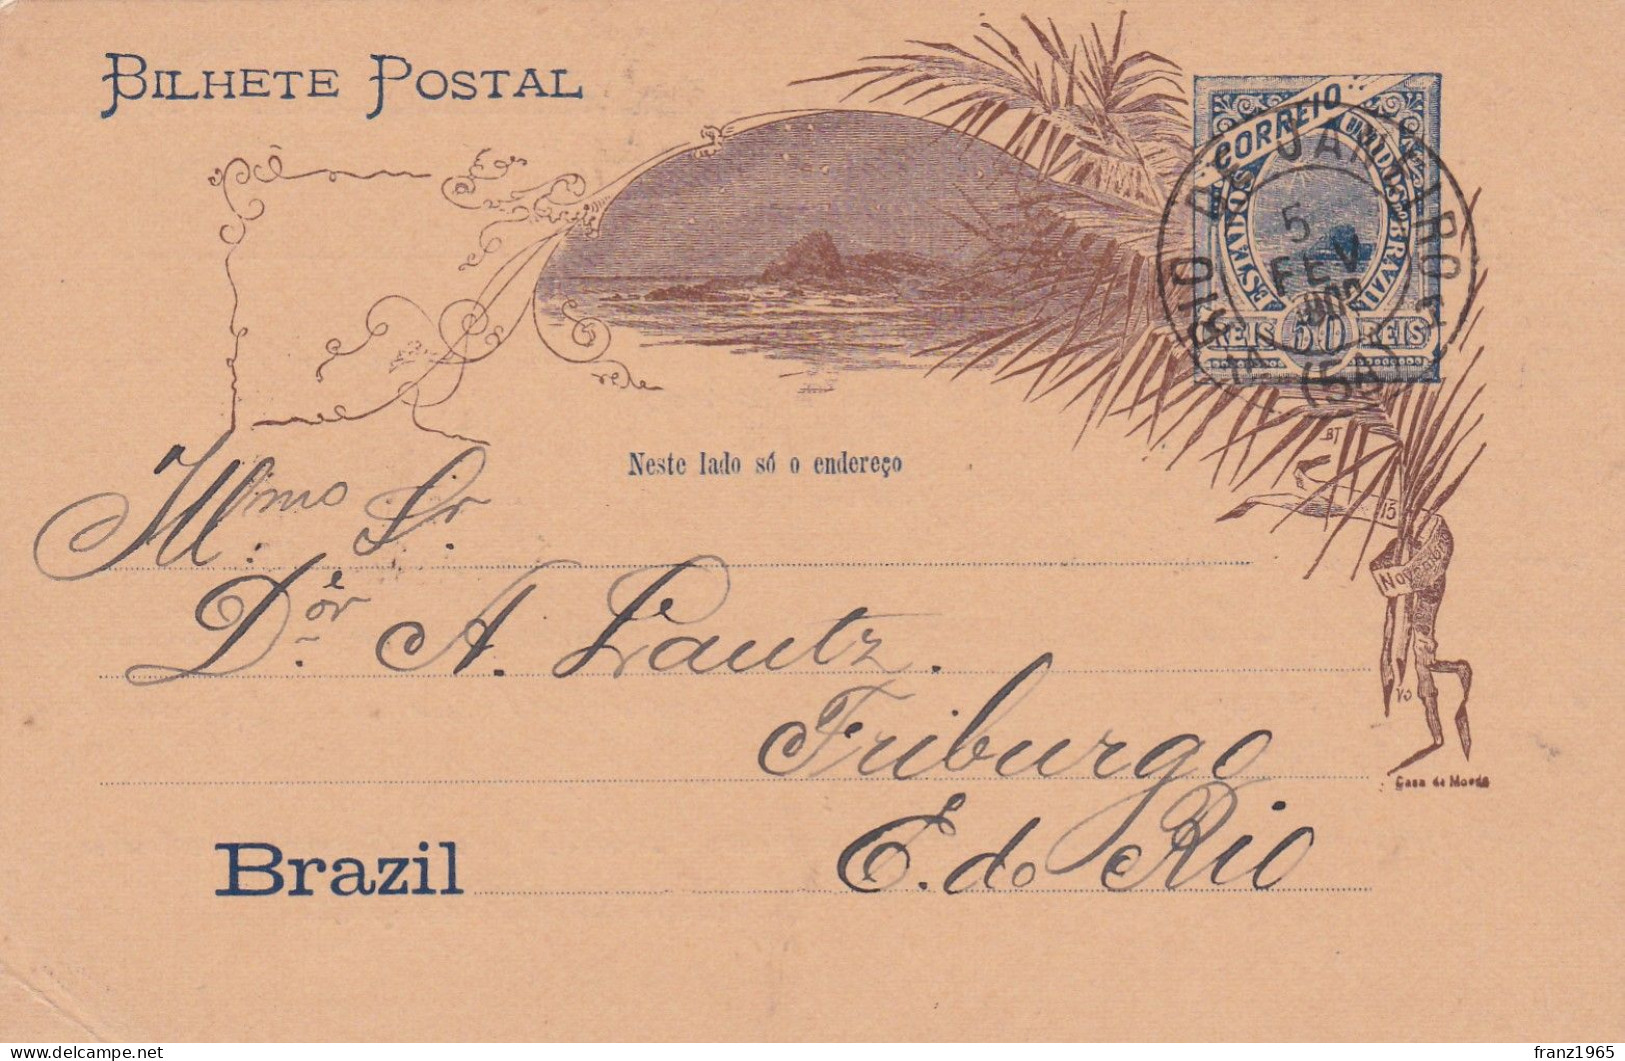 Bilhete Postal - 1905 - Lettres & Documents